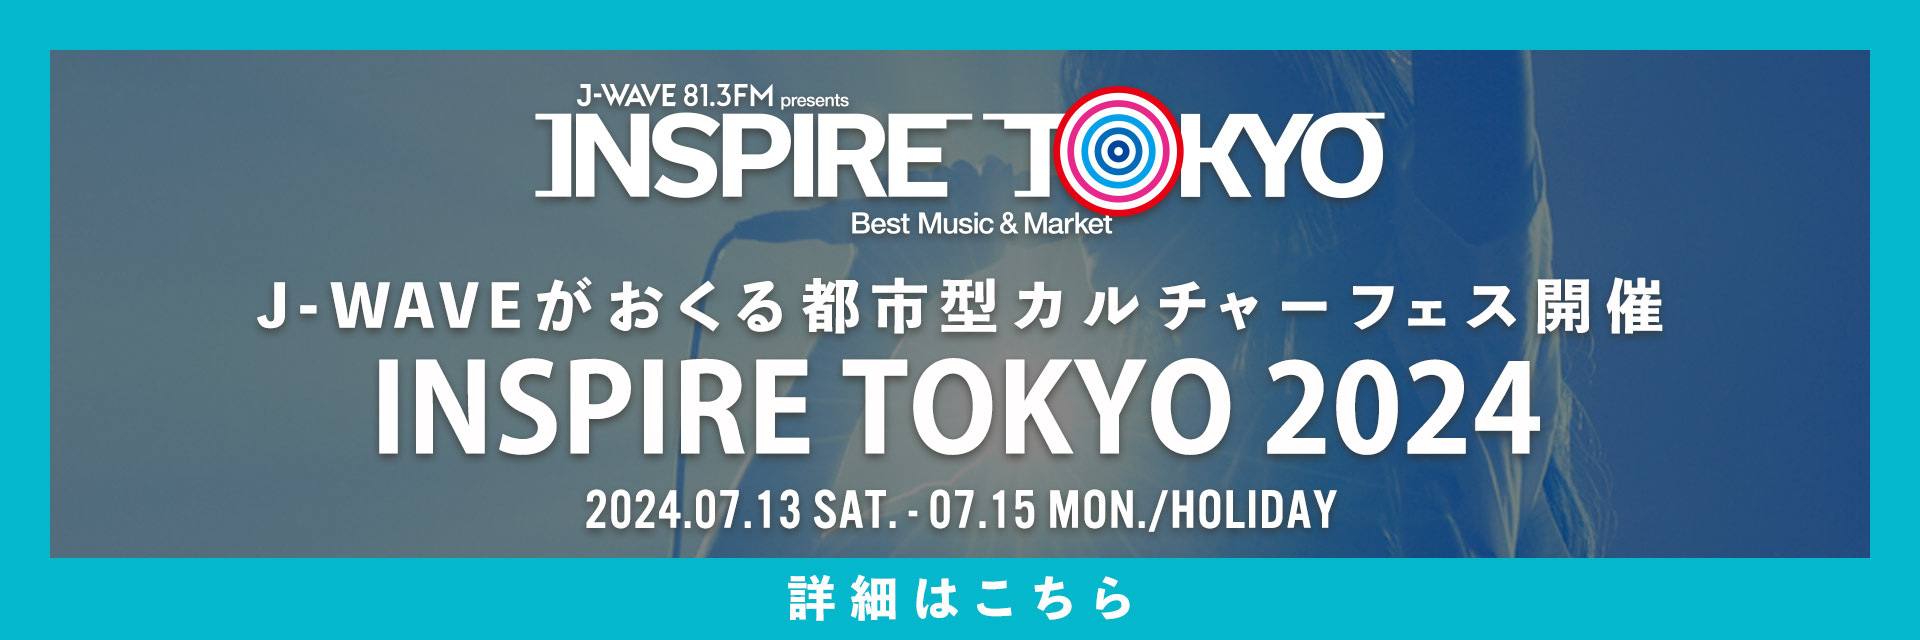 INSPIRE TOKYO 2024 開催